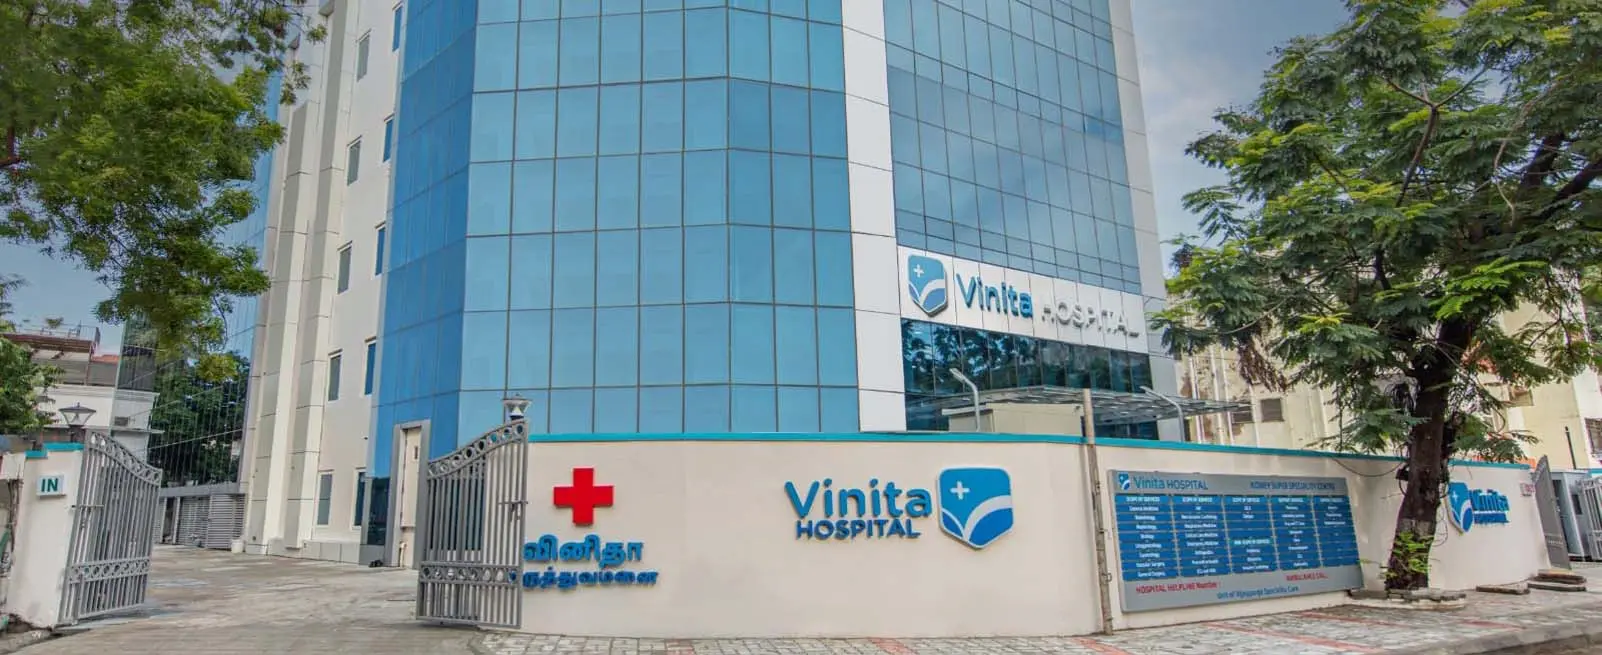 Vinita hospital banner